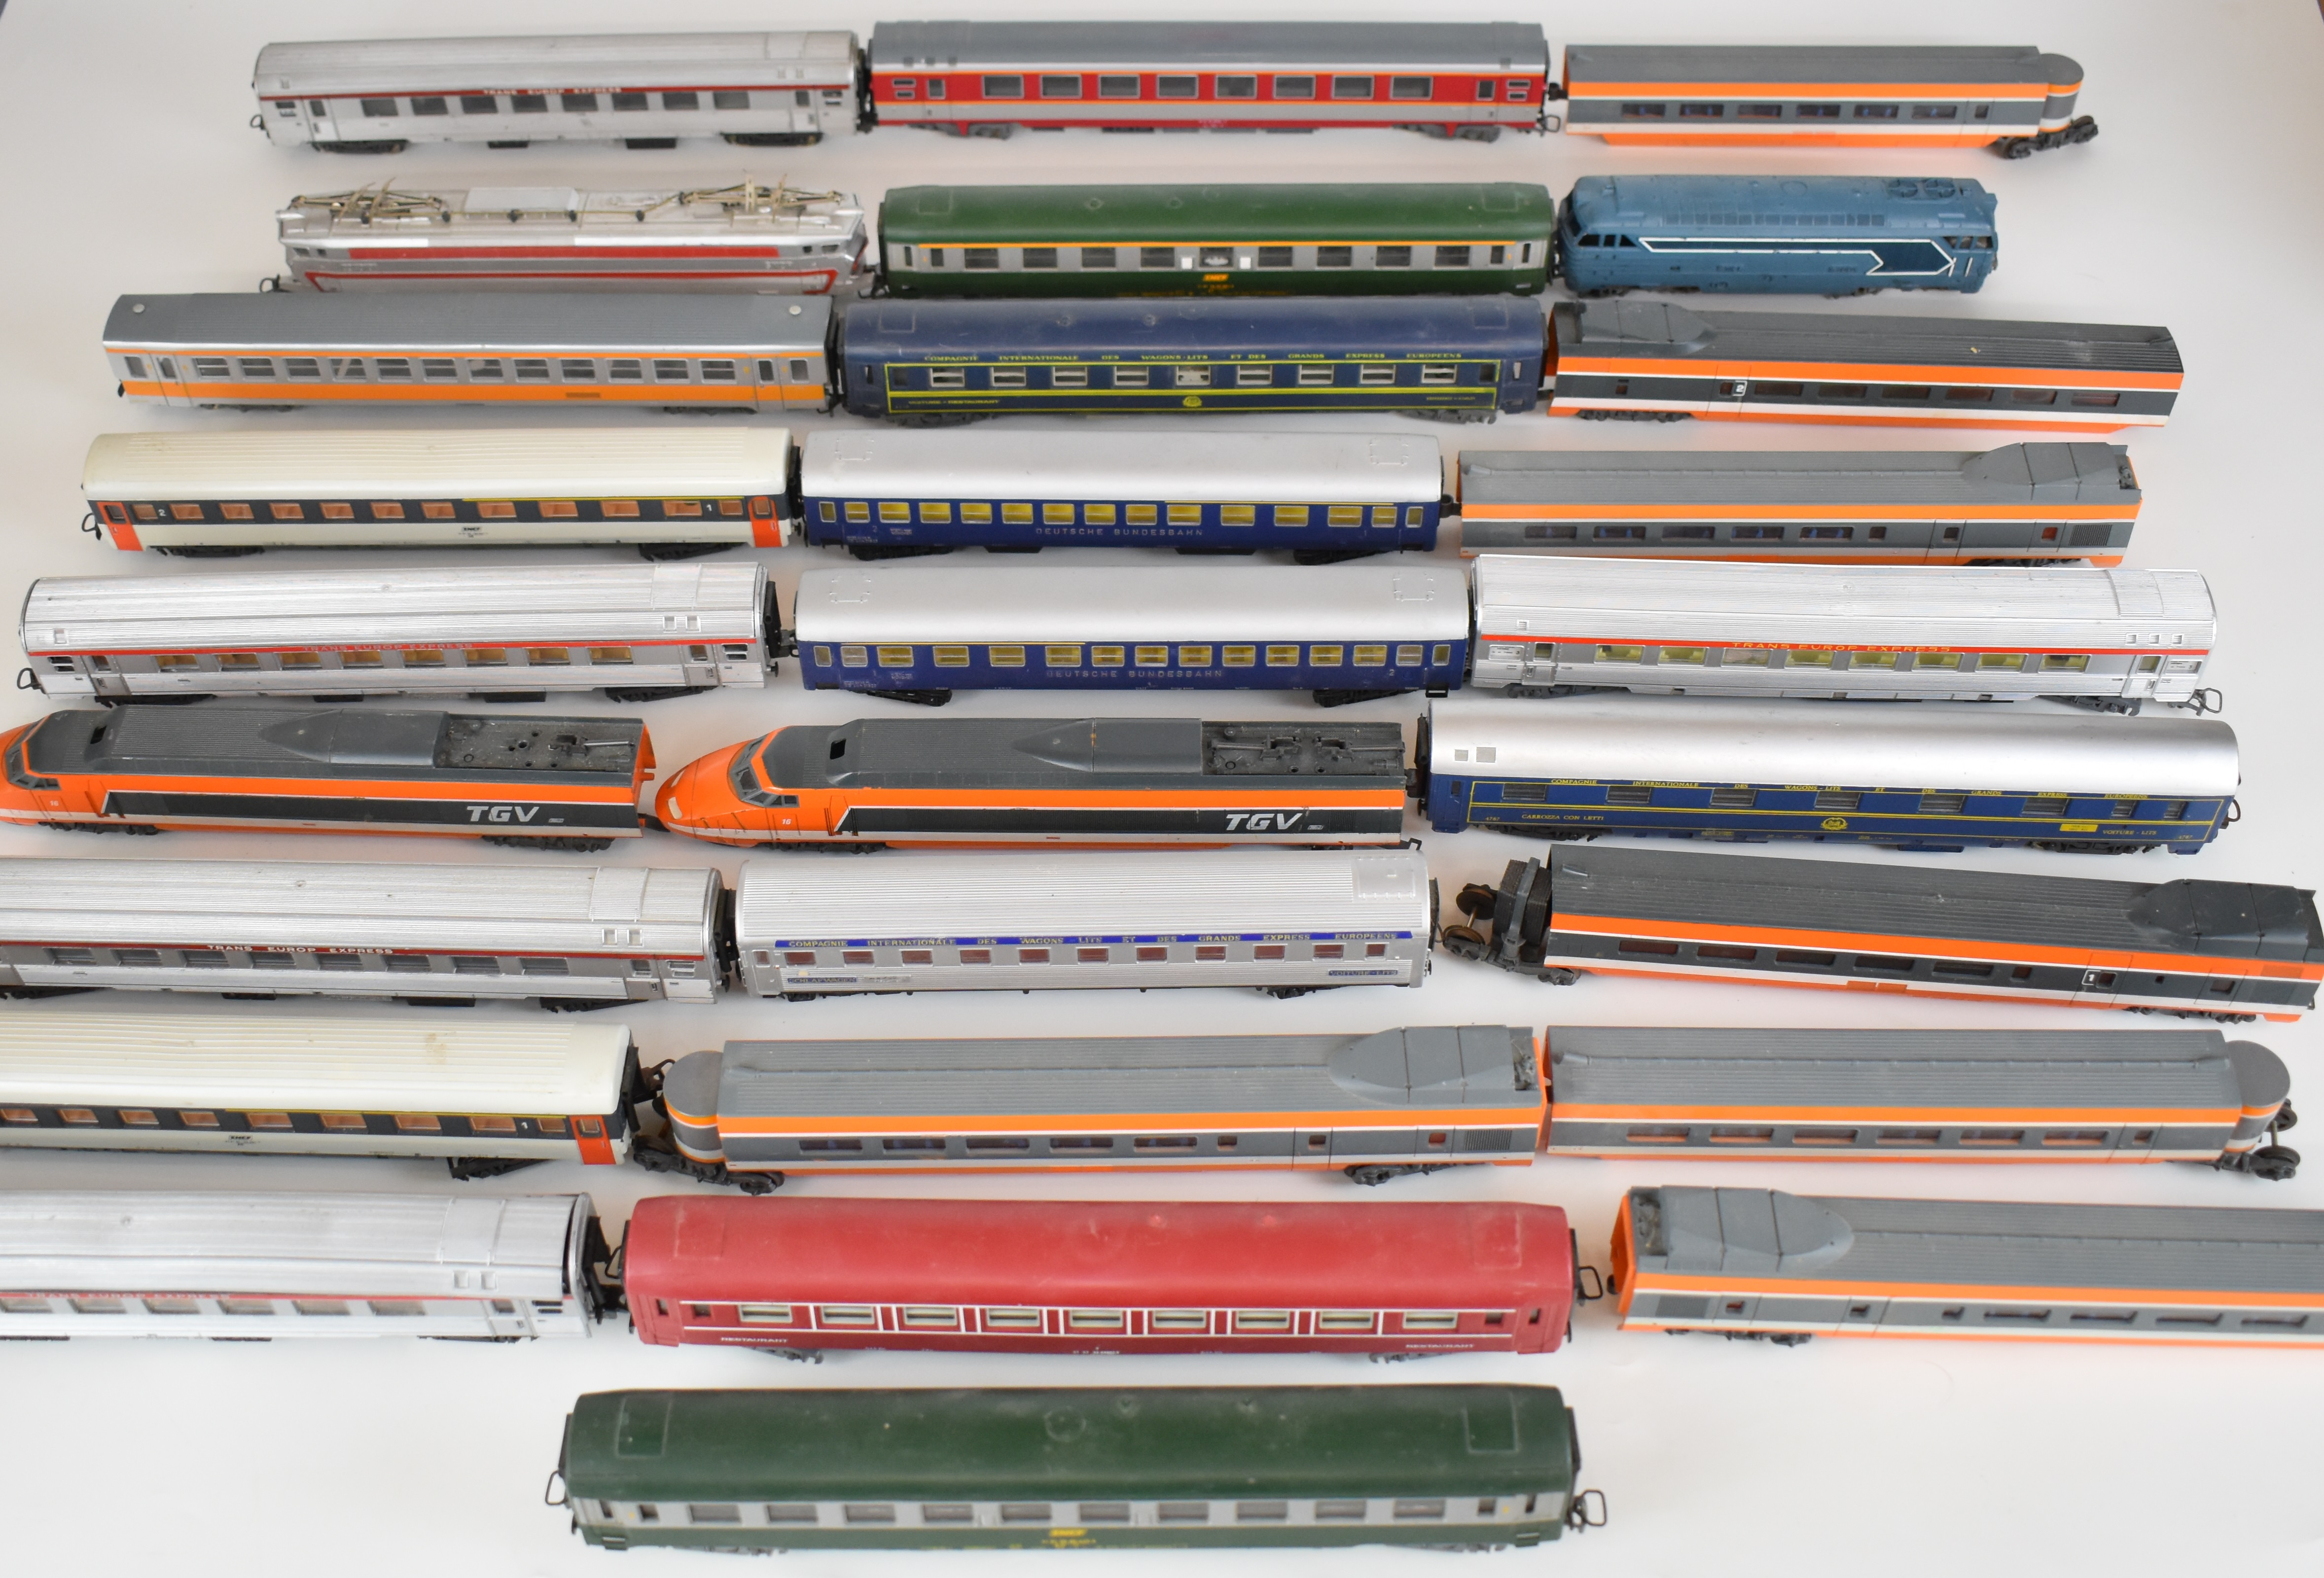 Two Lima H0 gauge model railway locomotives together with twenty-six European passenger carriages